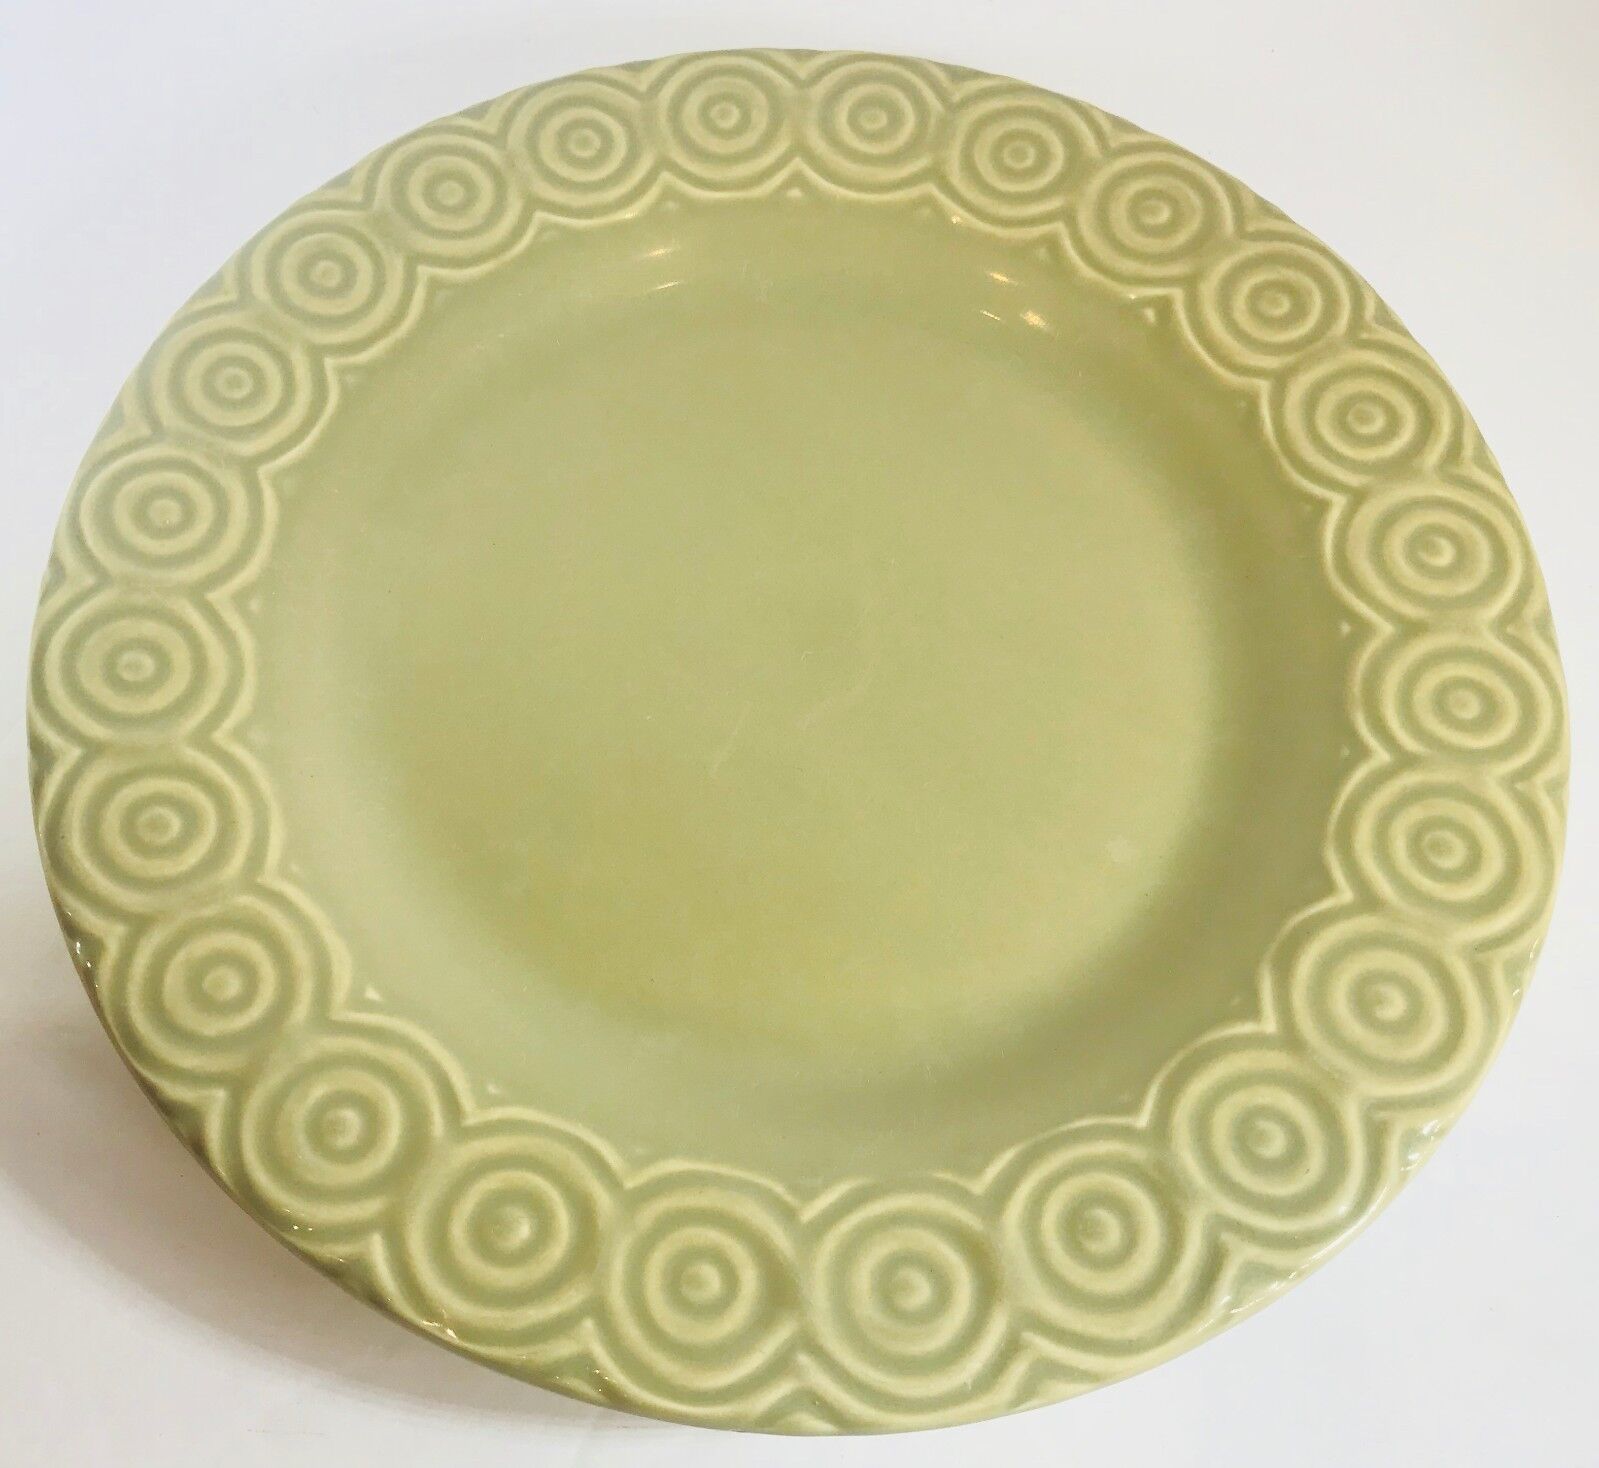 Primary image for Crate & Barrel SIERRA KHAKI Dinner Plate Portugal Ceramic Dinnerware